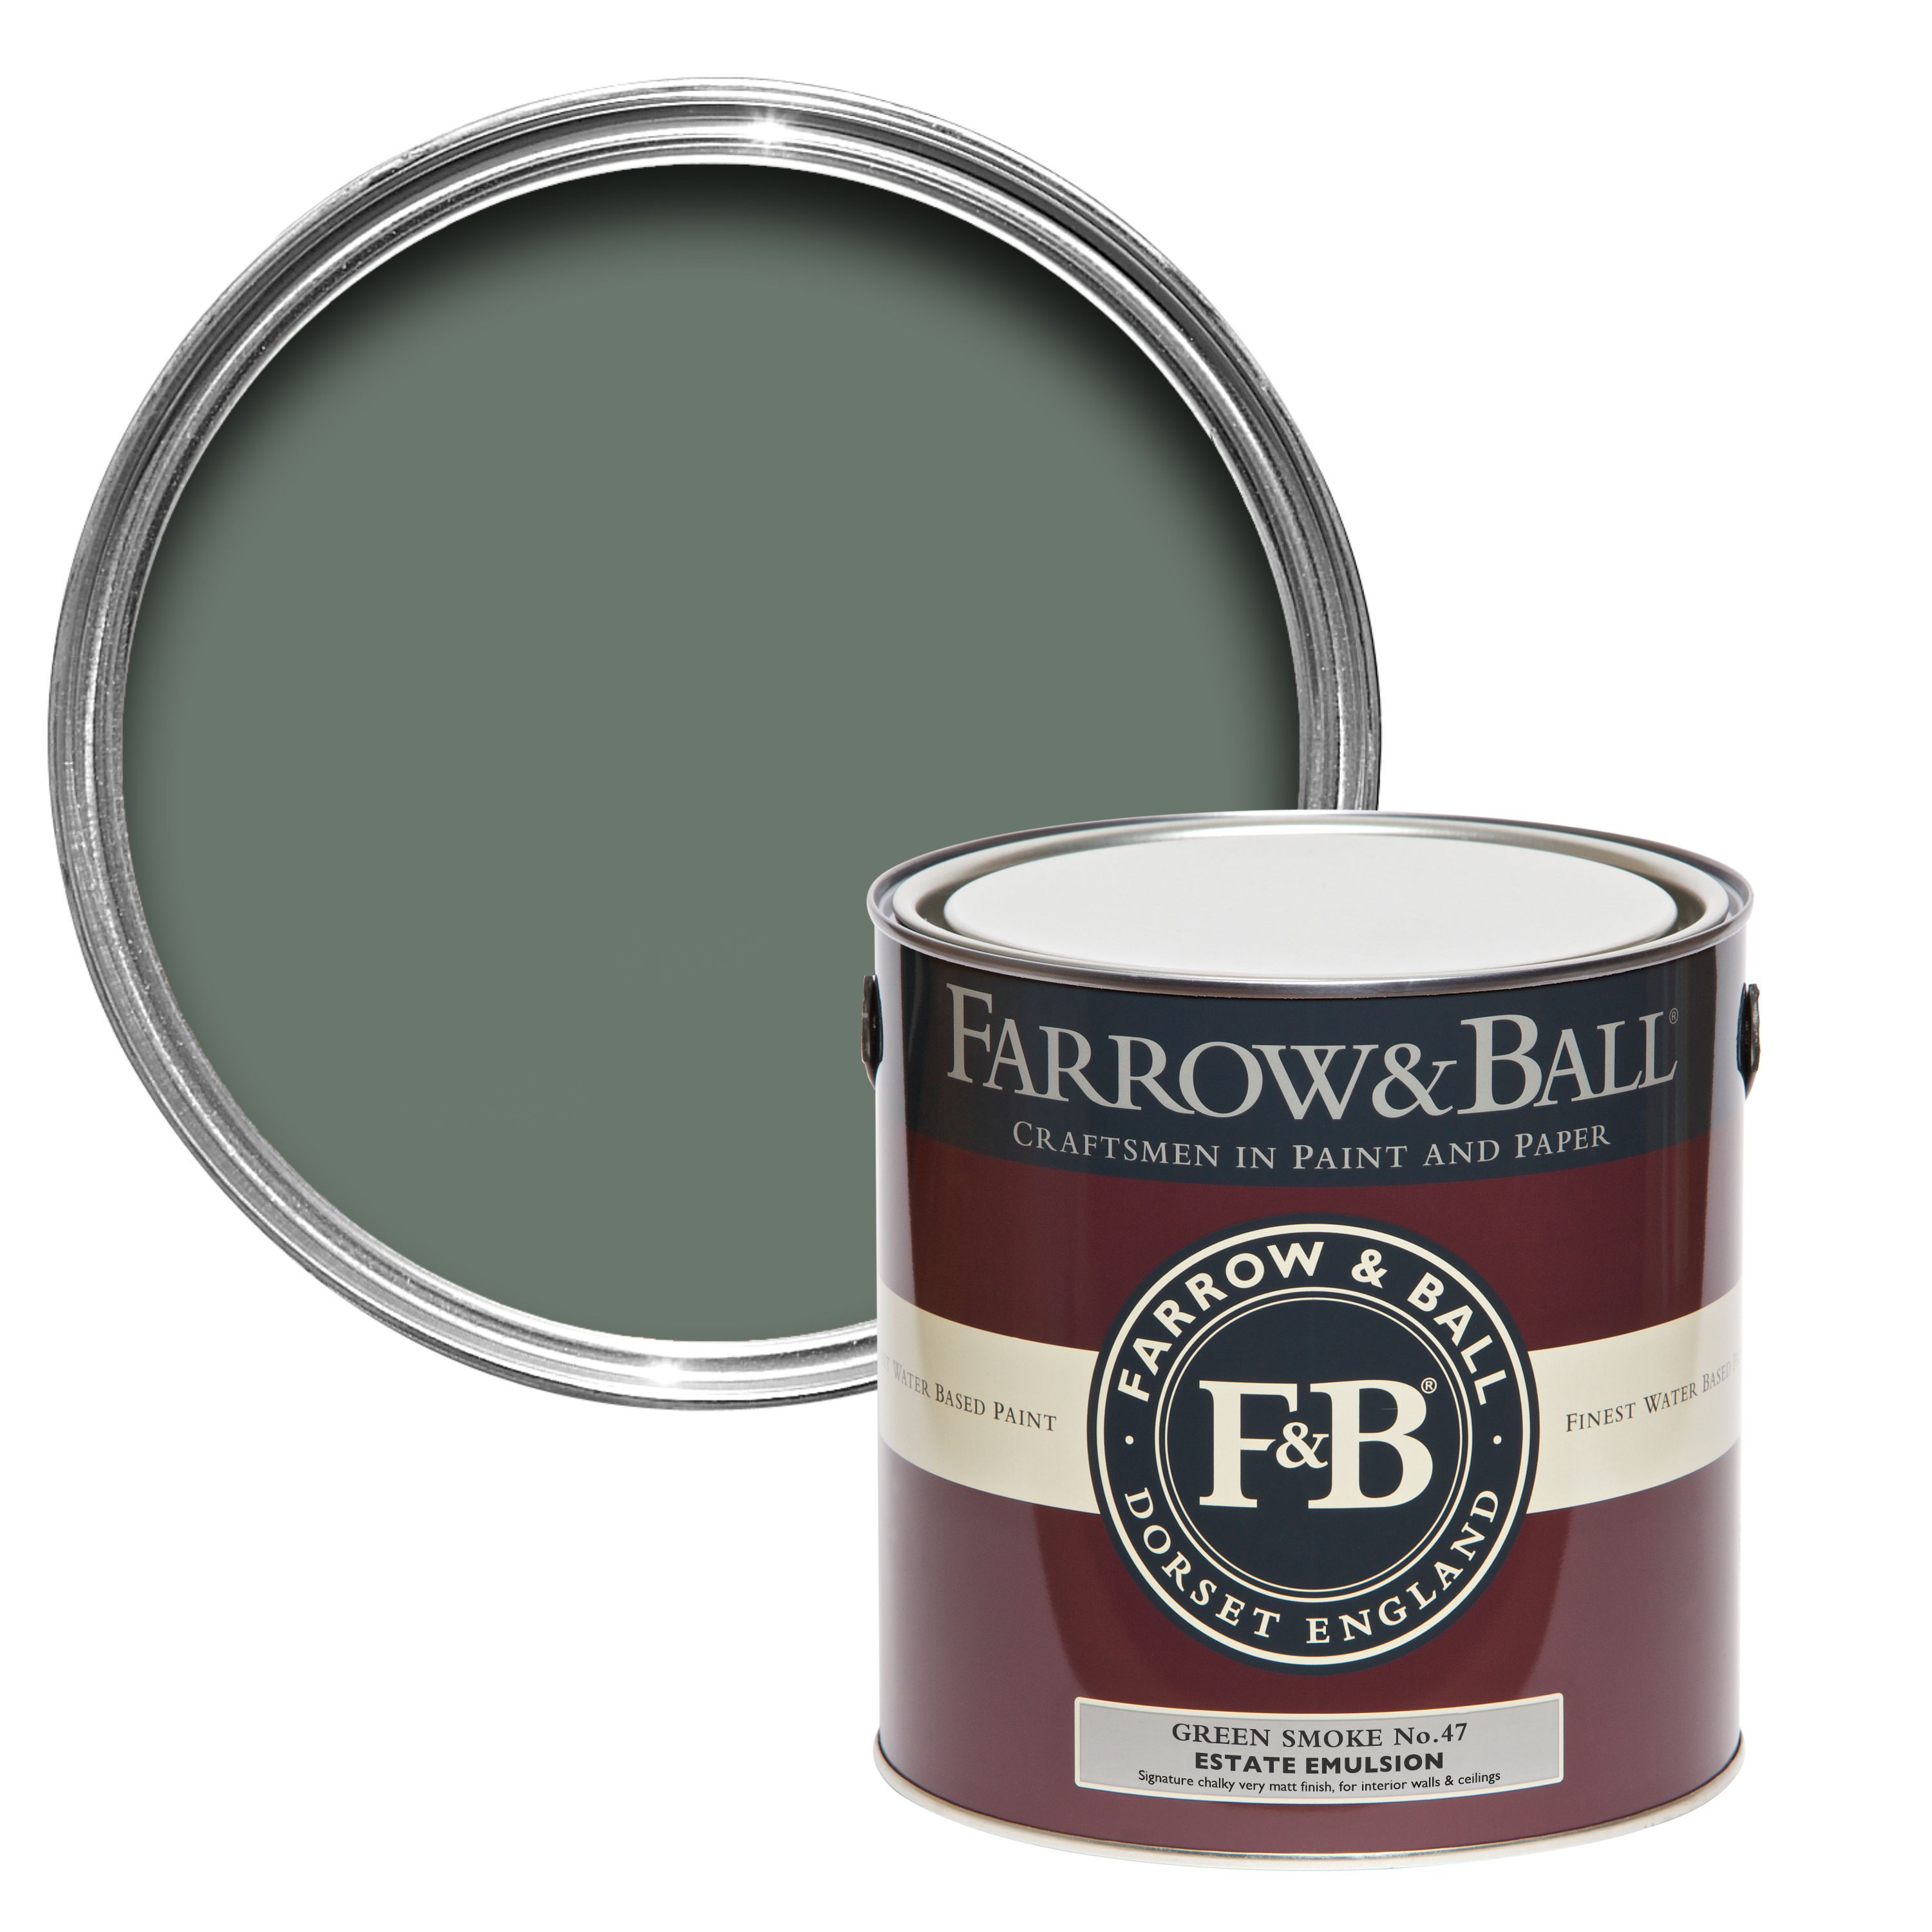 Farrow & Ball Estate Green smoke No.47 Matt Emulsion paint, 2.5L